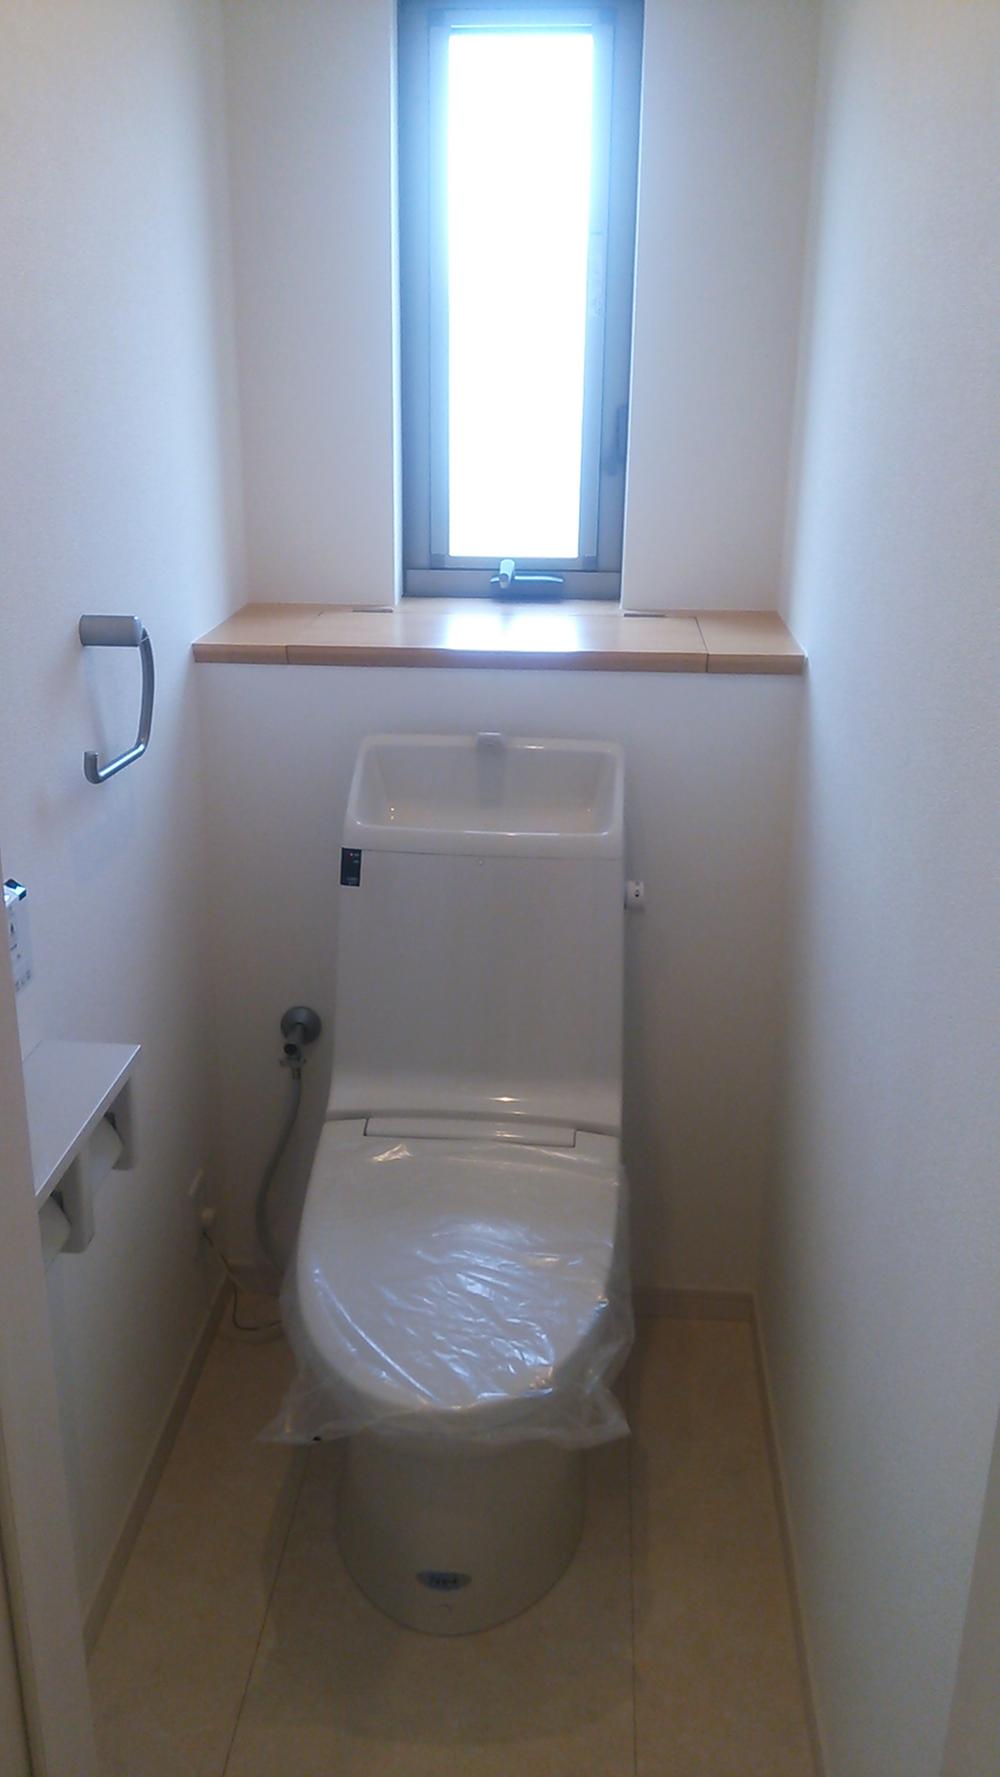 Toilet. Counter with storage of toilet